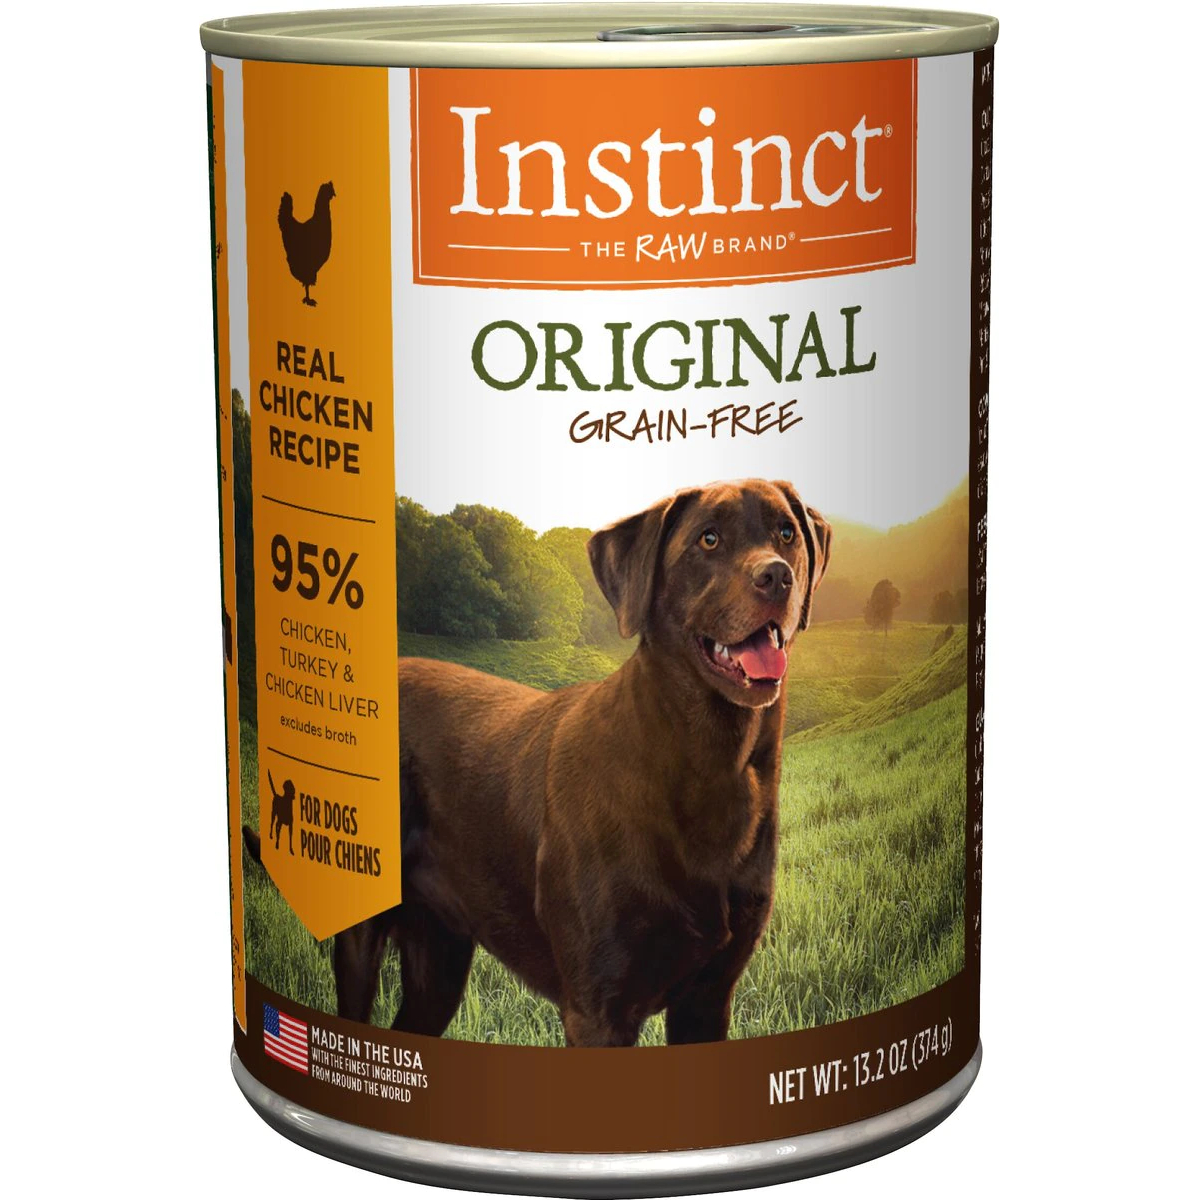 Instinct Original Grain-Free Real Chicken Recipe Natural Wet Canned Dog Food